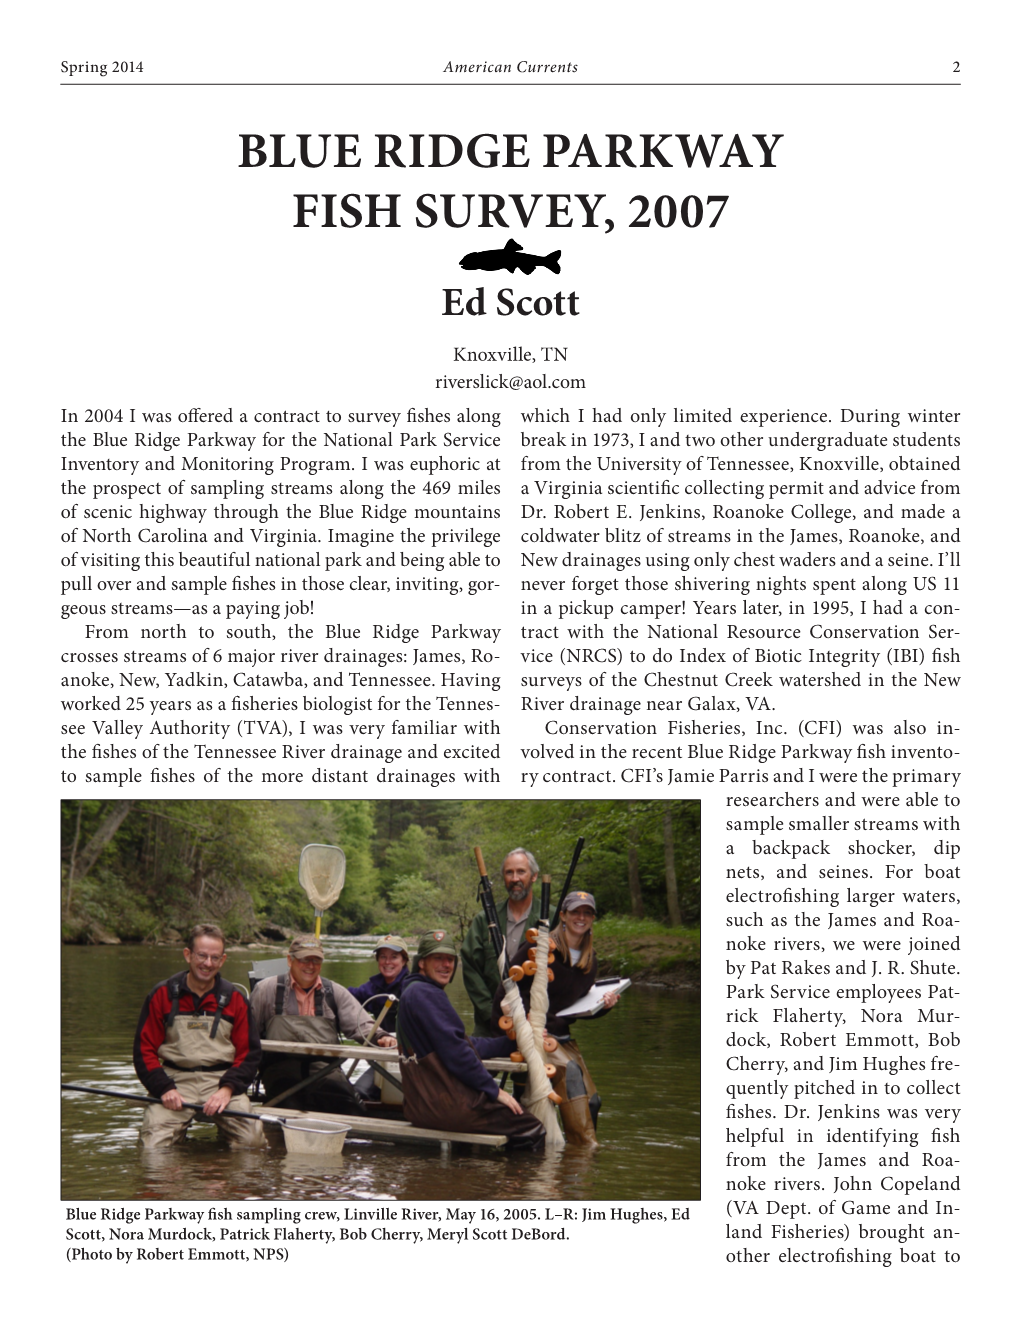 Blue Ridge Parkway Fish Survey, 2007